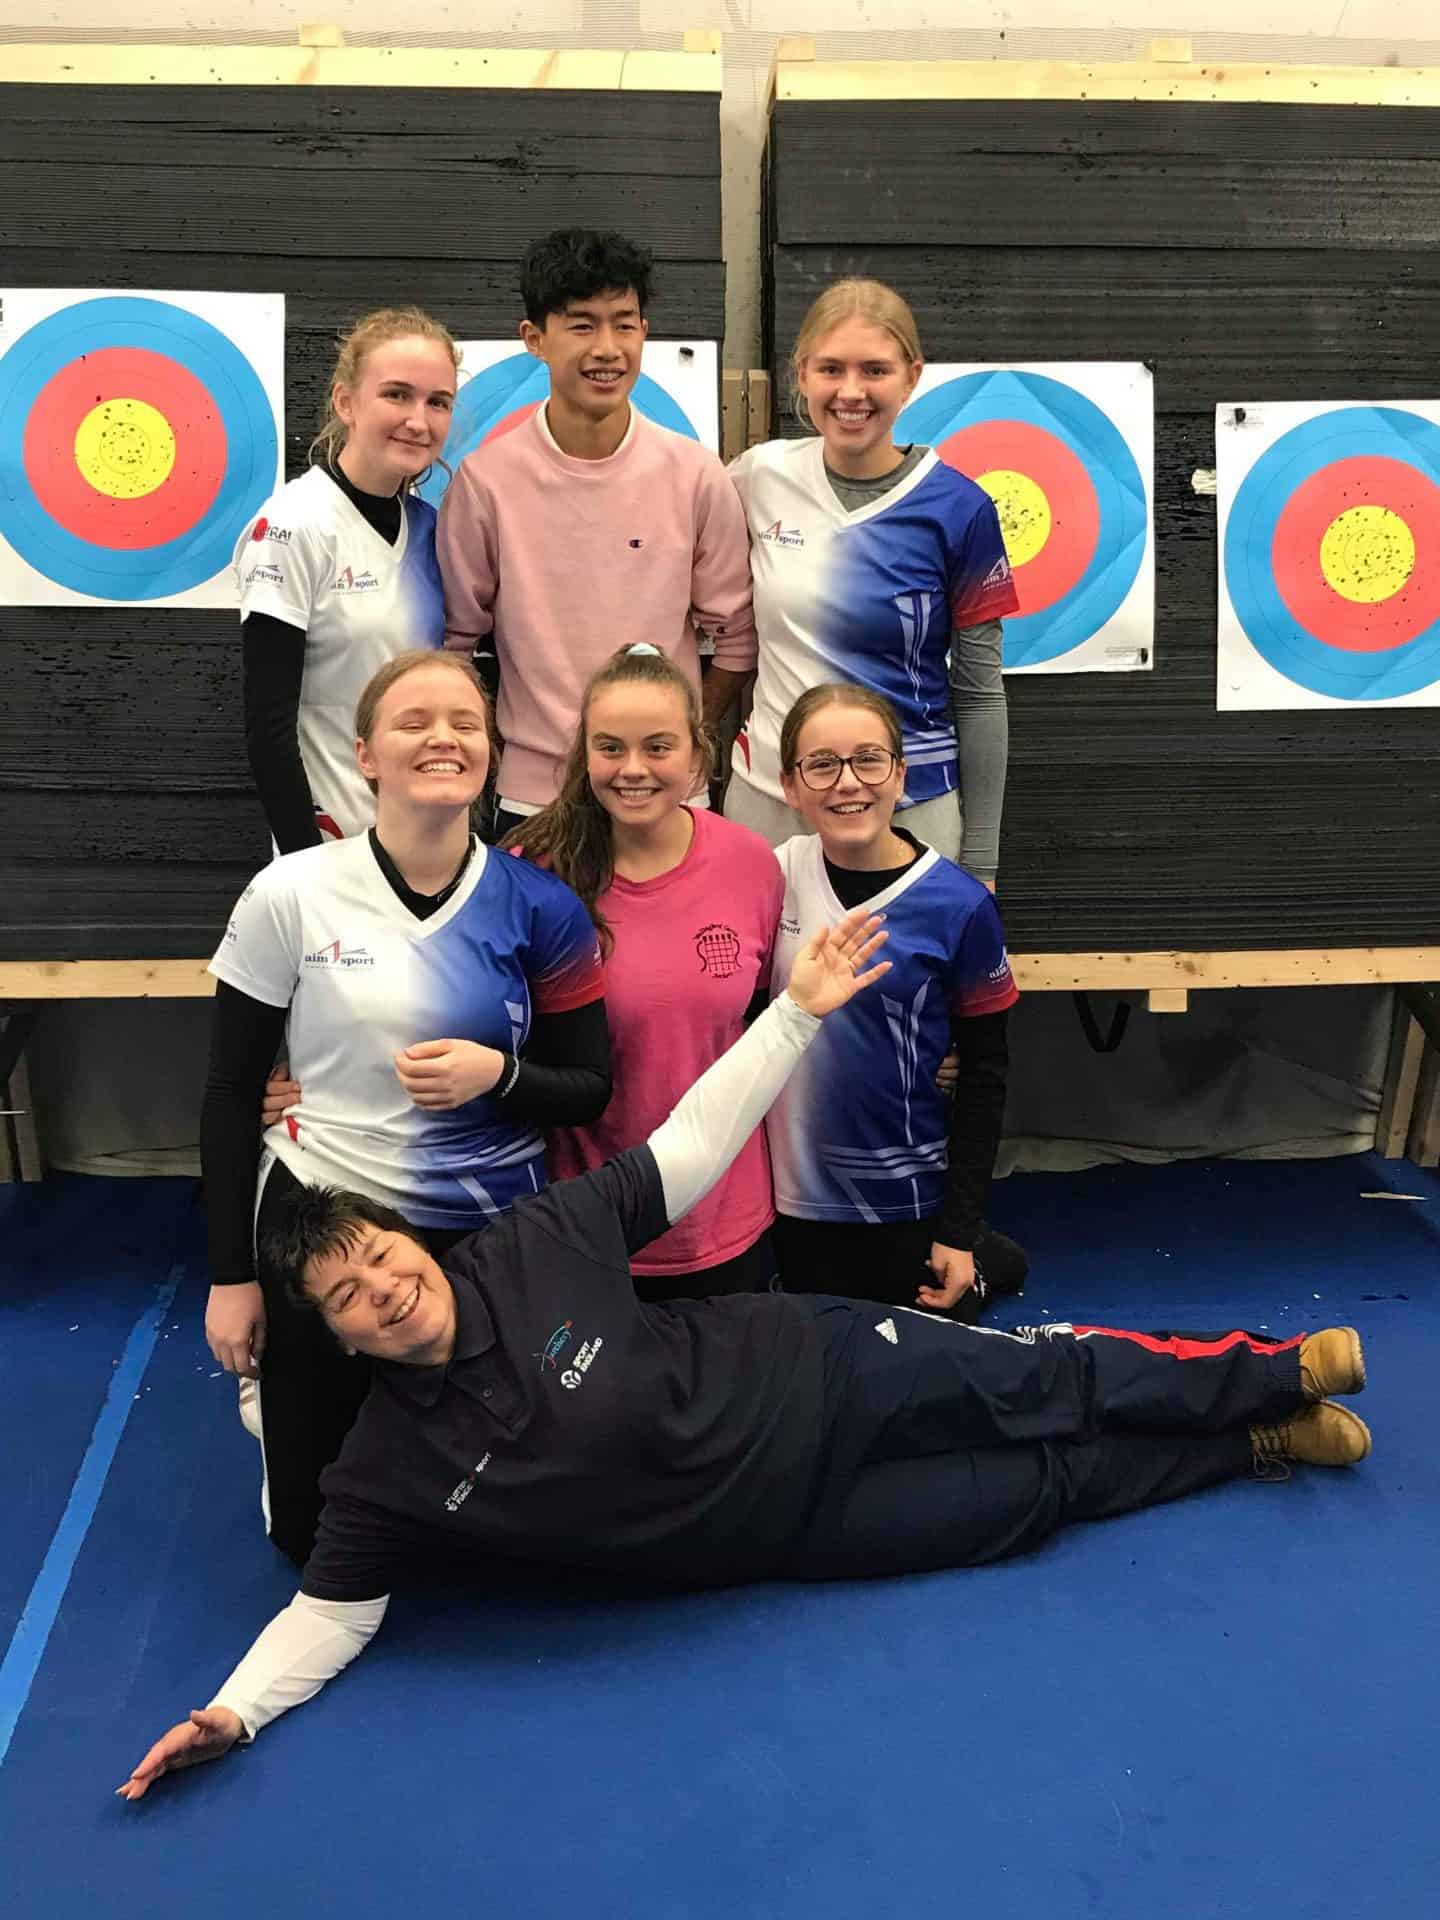 Women in sport: celebrating our female archery stars